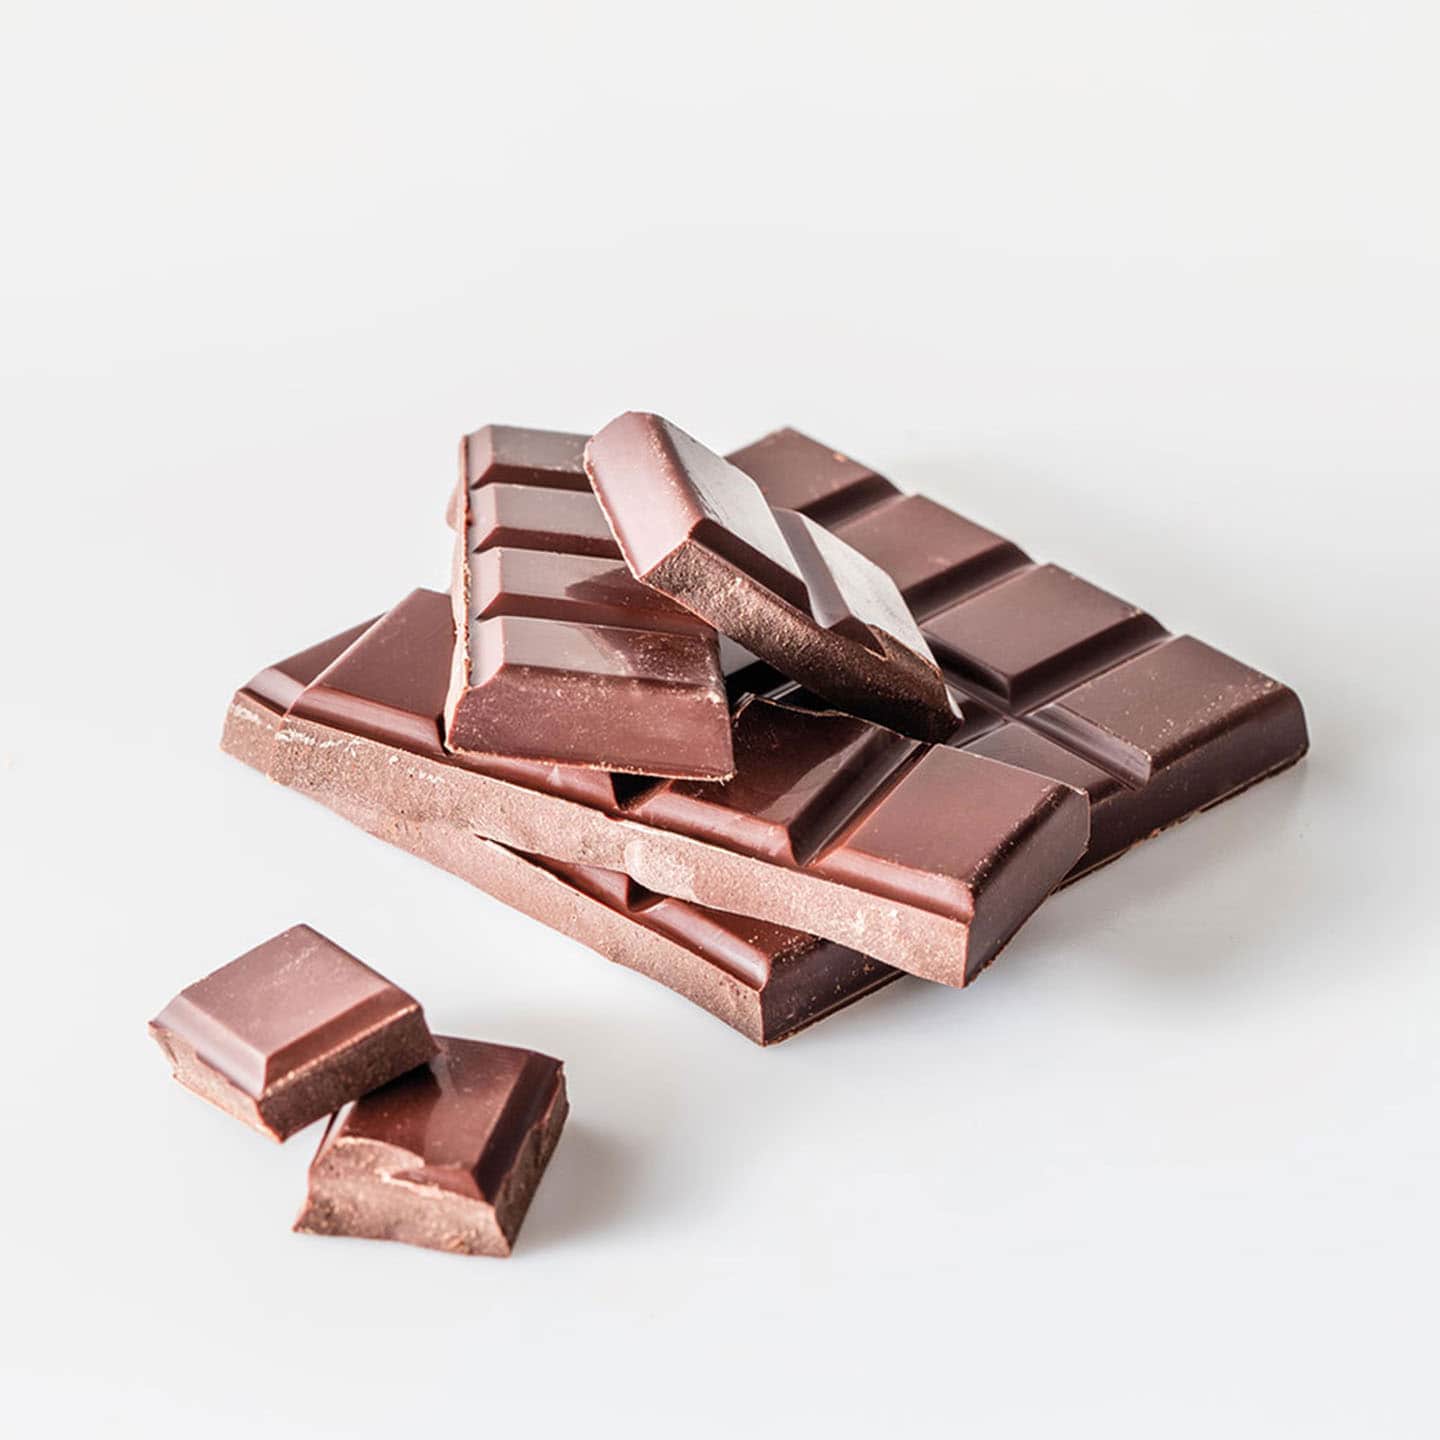 Tablette Chocolat Noir 70% Grand Cru origine Papouasie 100g